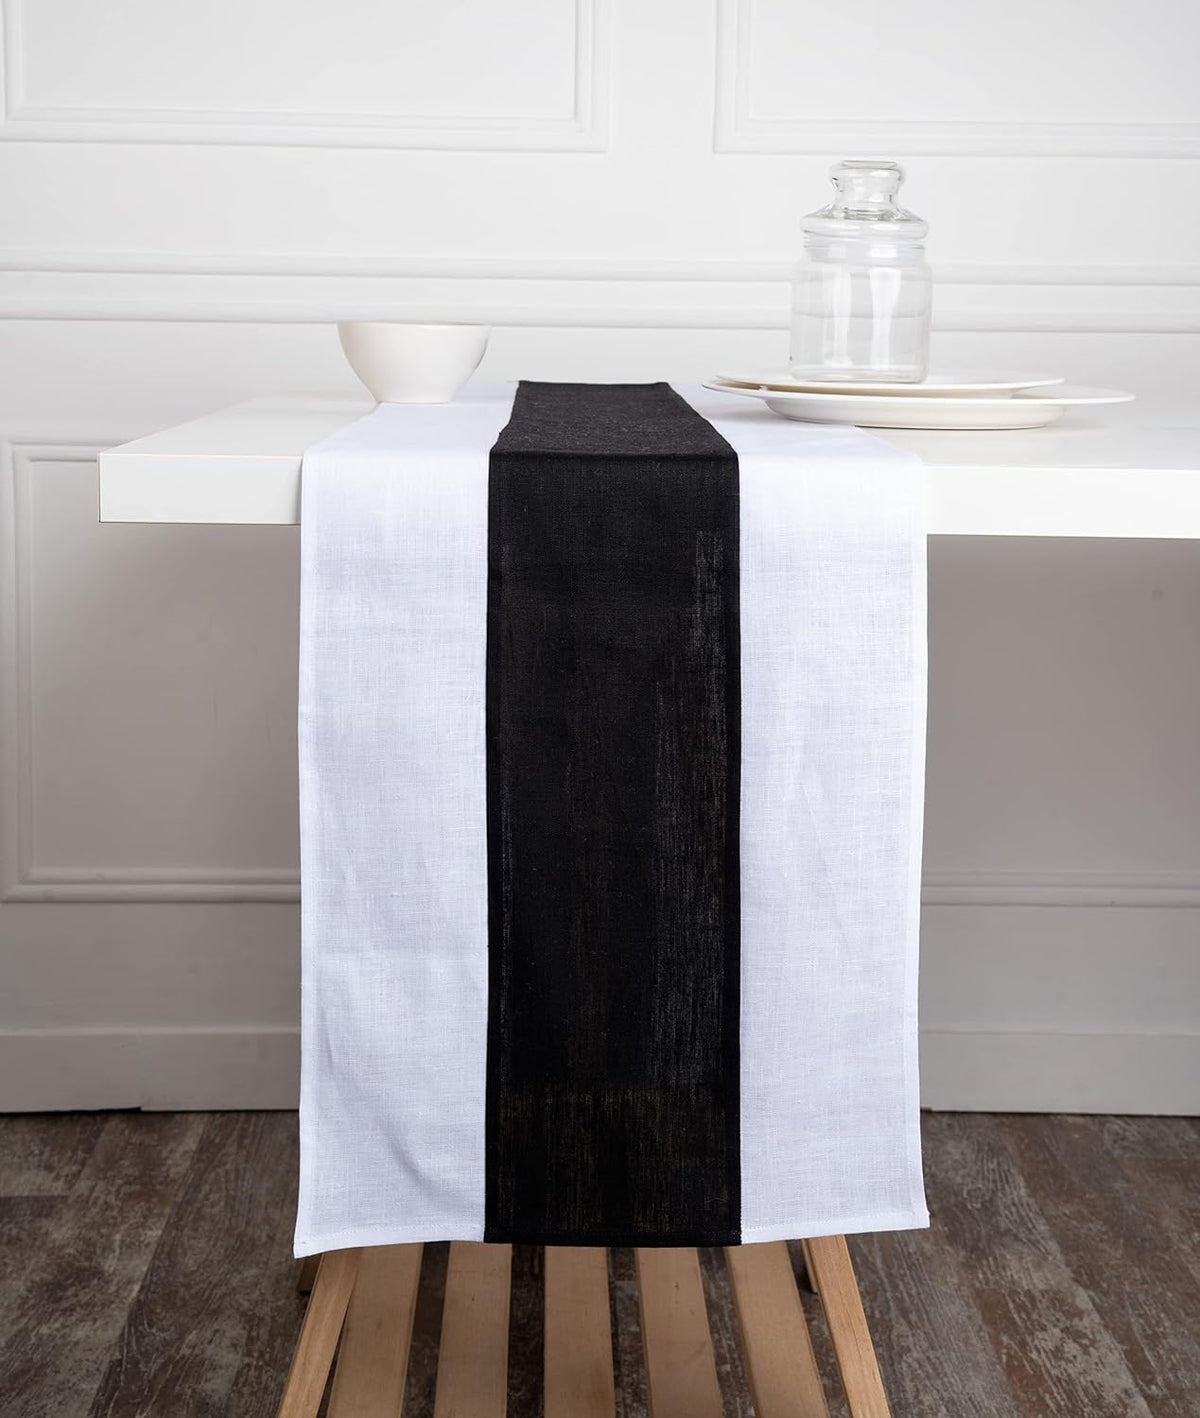 White and Black Linen Table Runner - Splicing